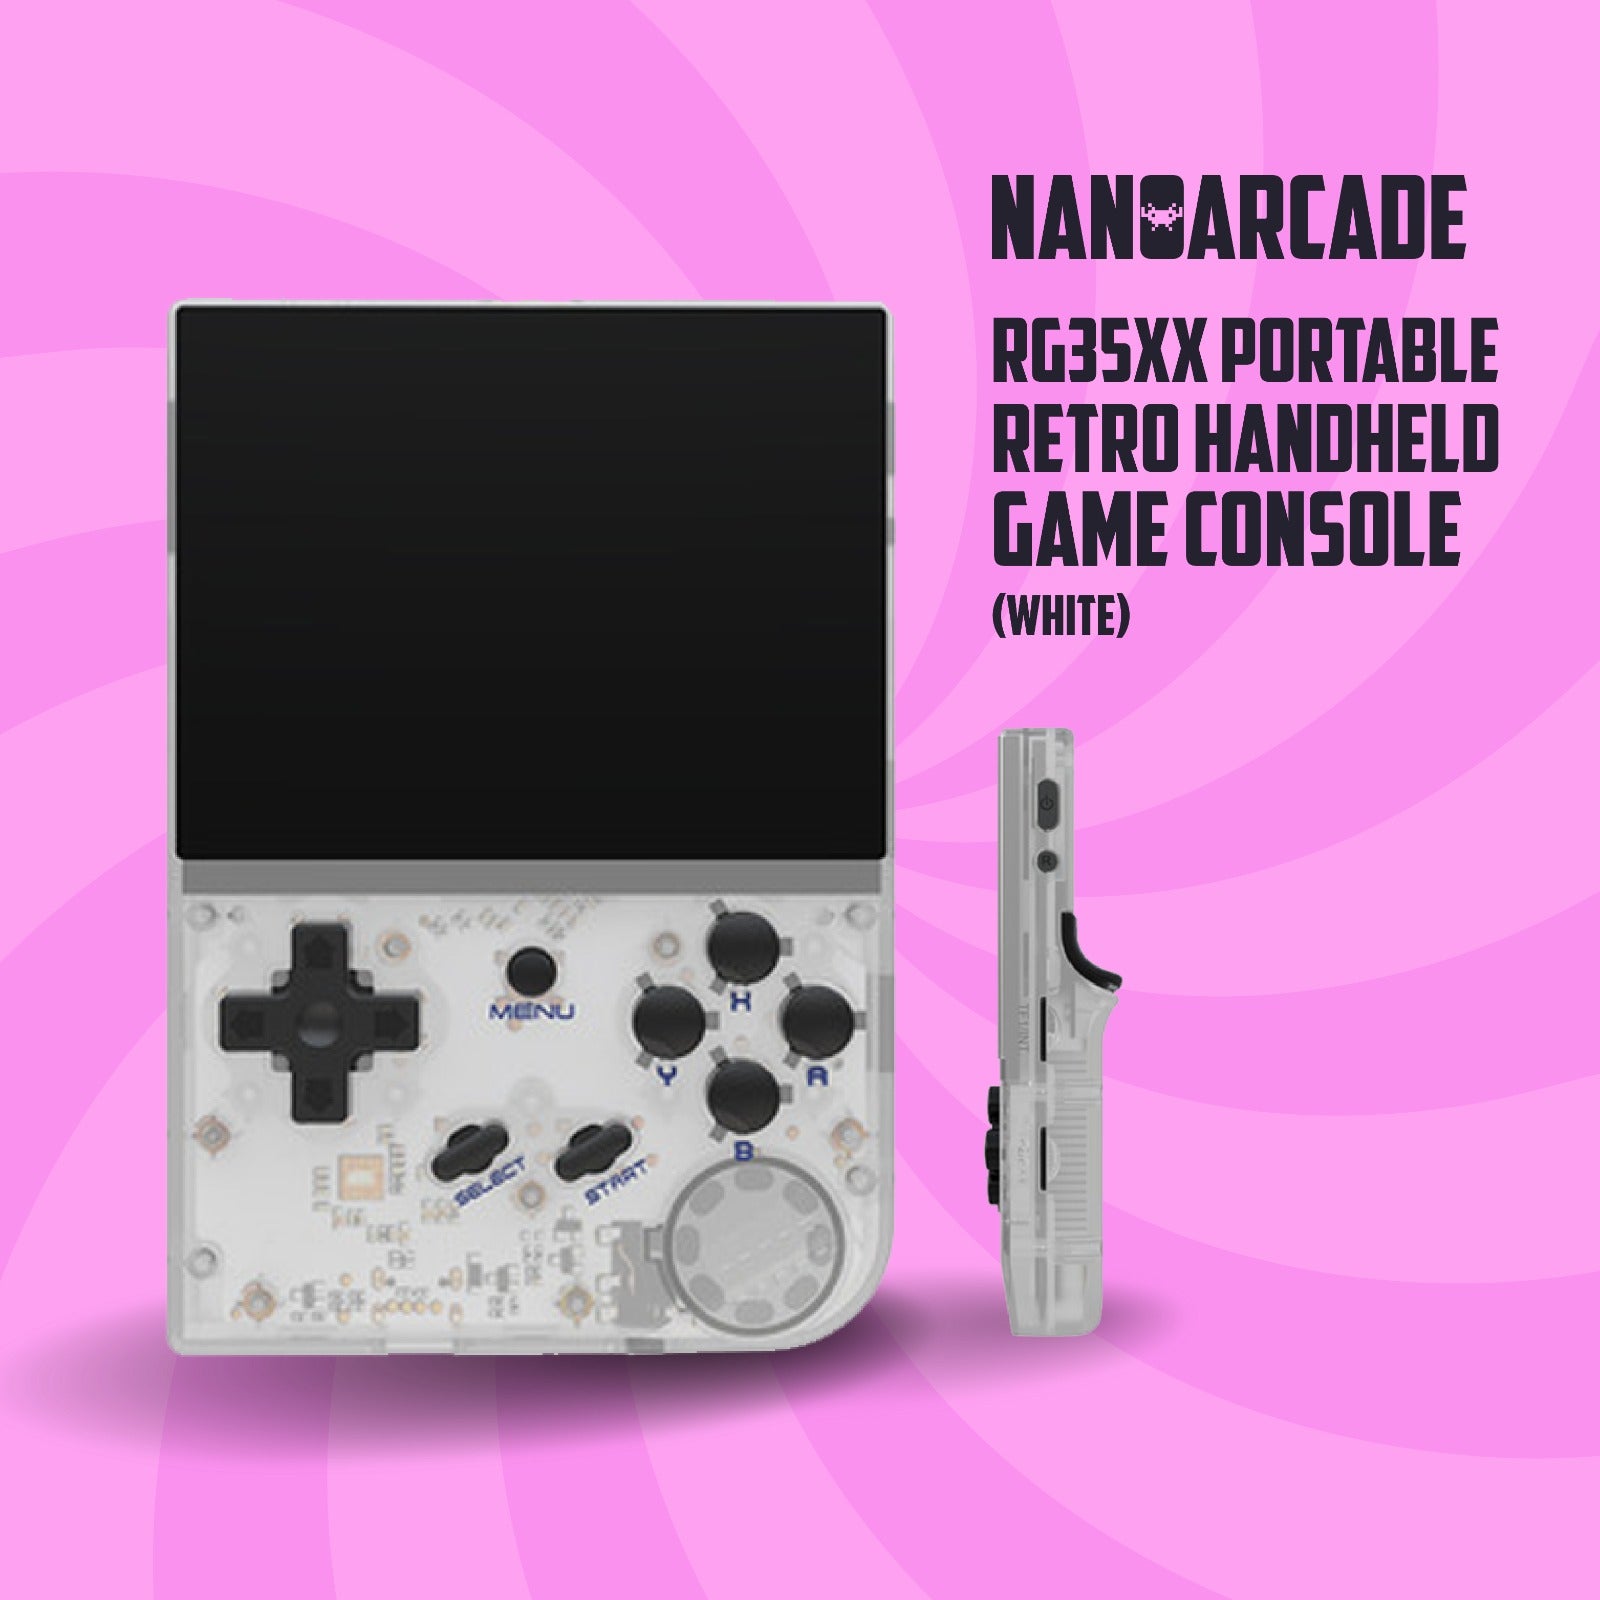 Load video: NanoArcade - R36S Retro Handheld Video Game Console